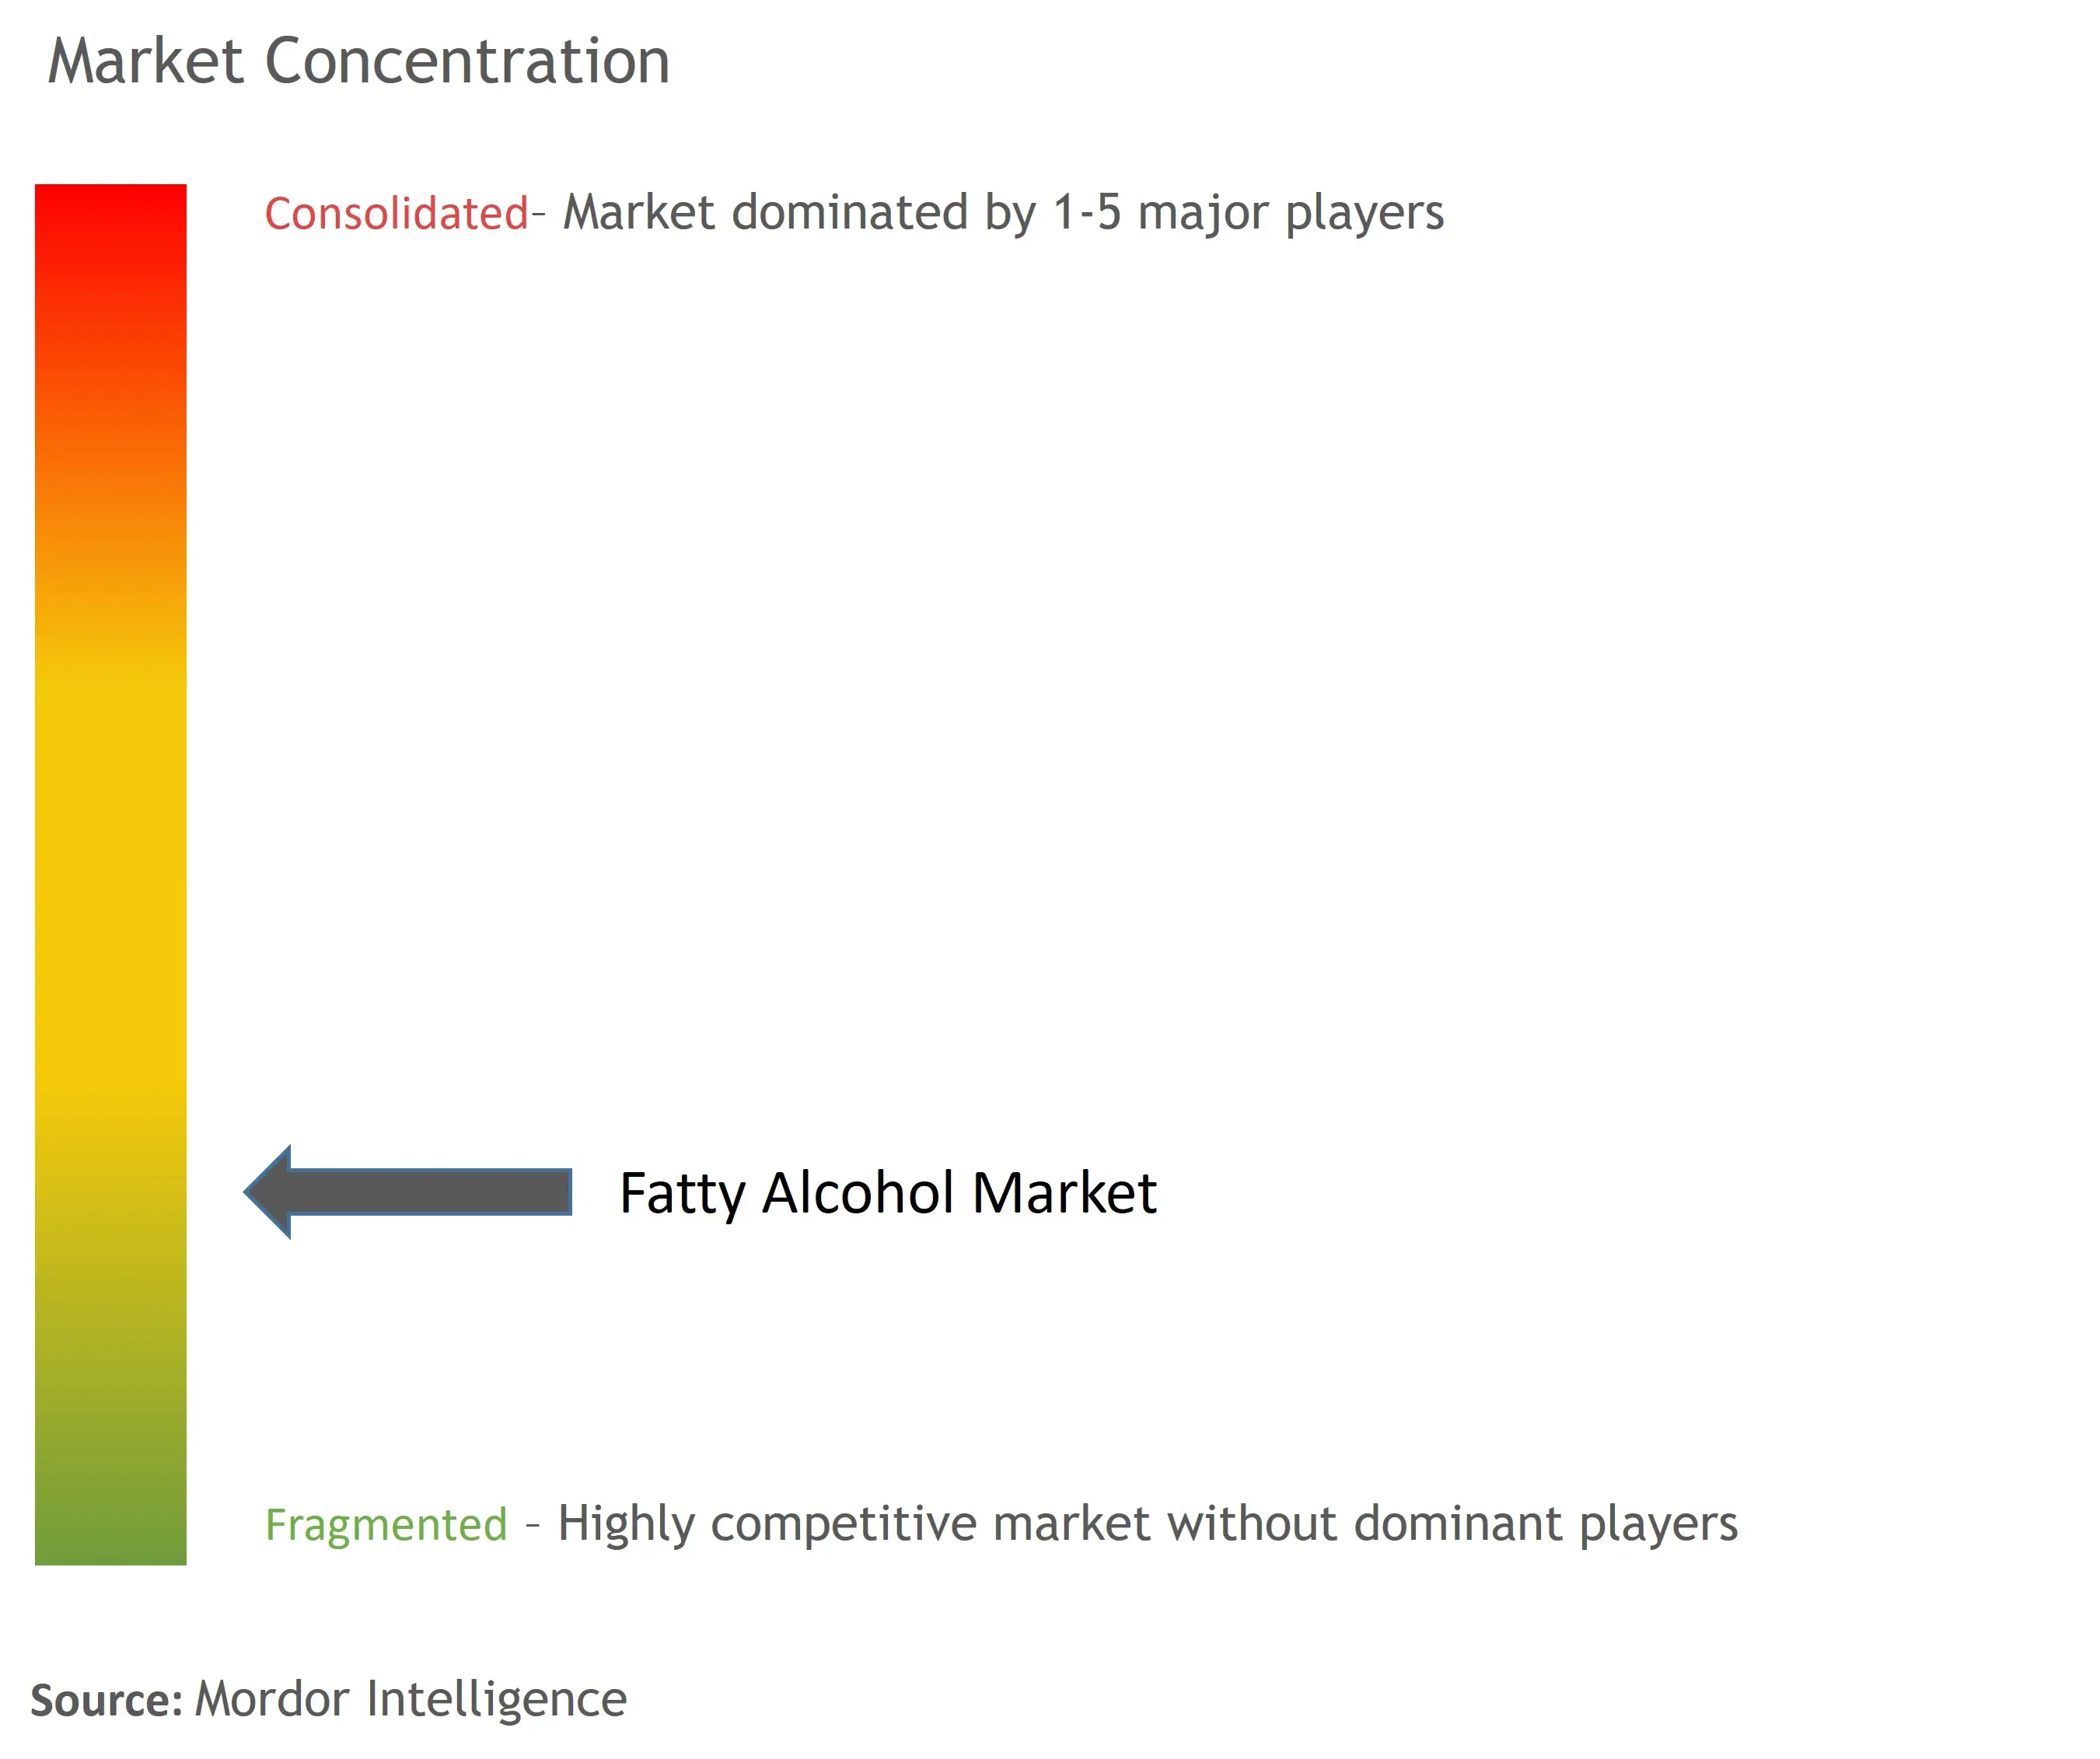 Fatty Alcohol Market Concentration